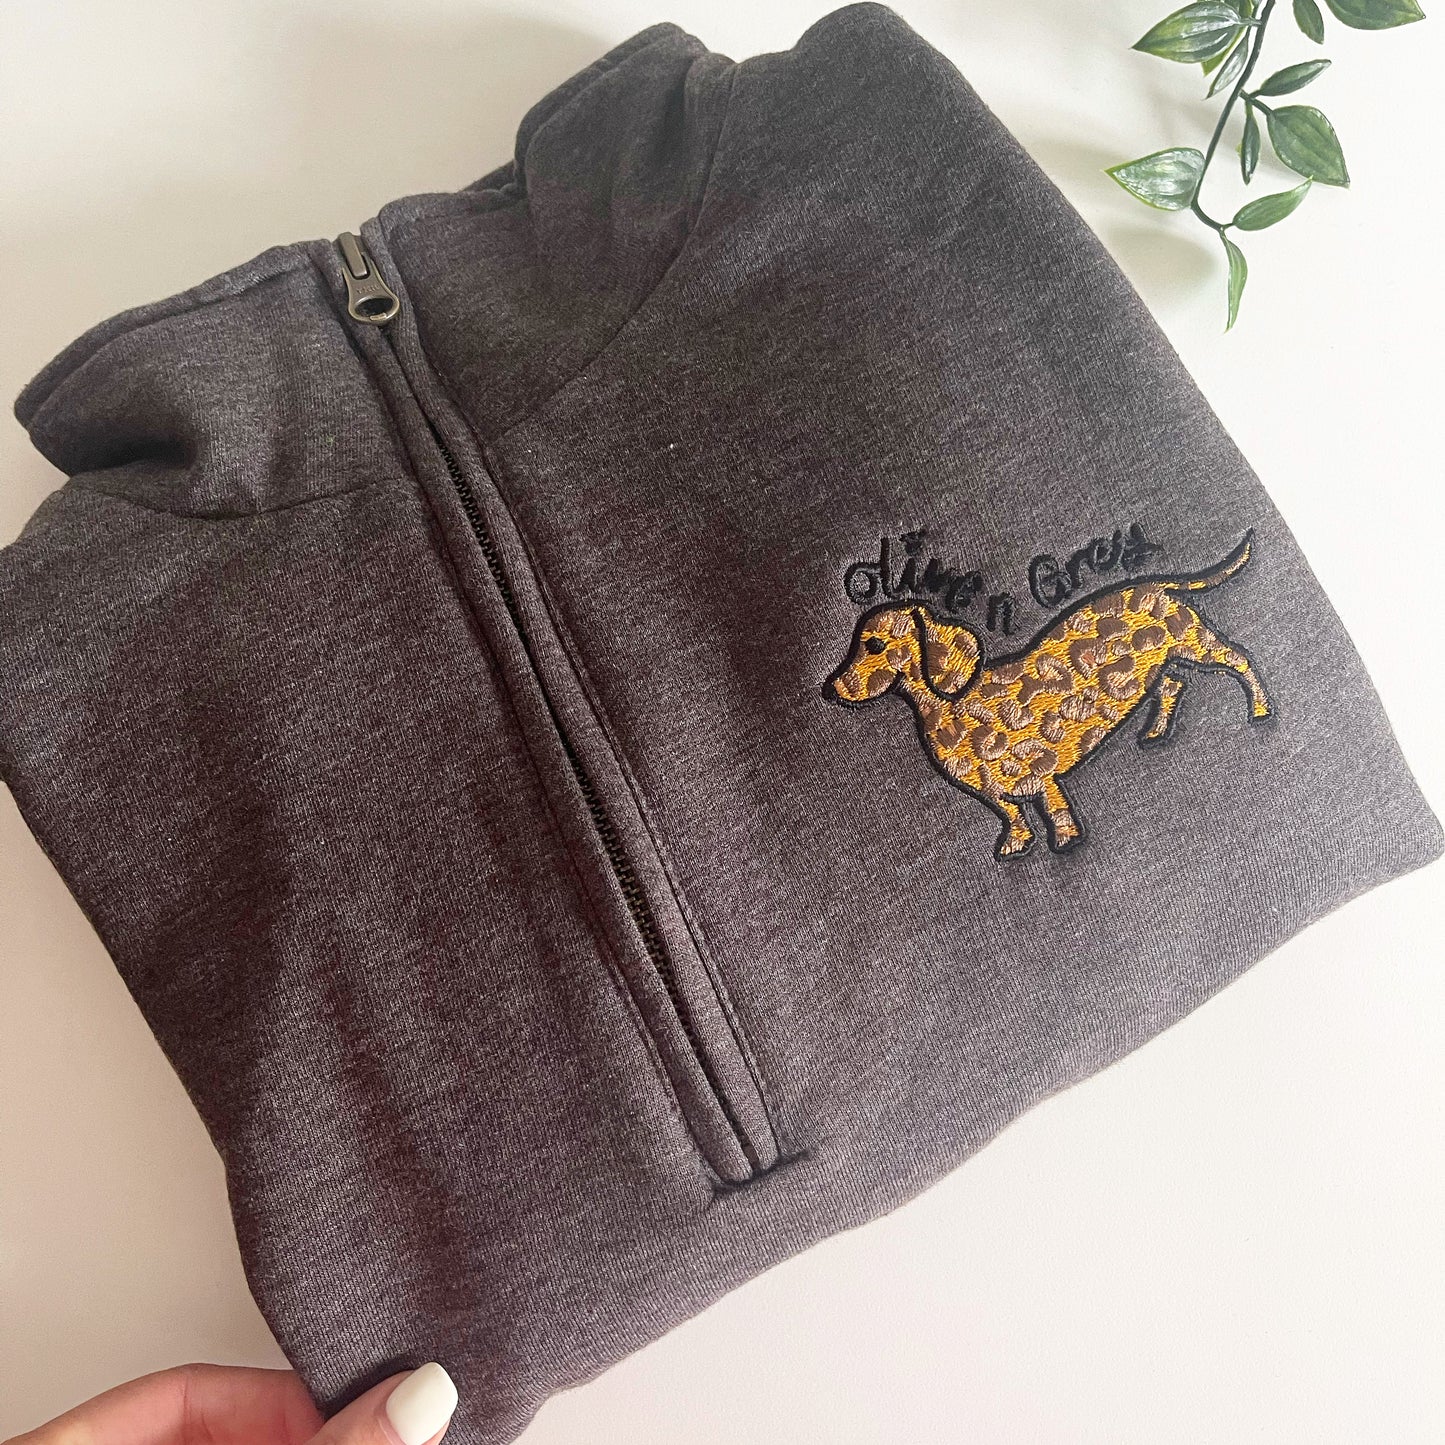 Embroidered Olive n Grey Leopard 1/4 Zip Sweatshirt